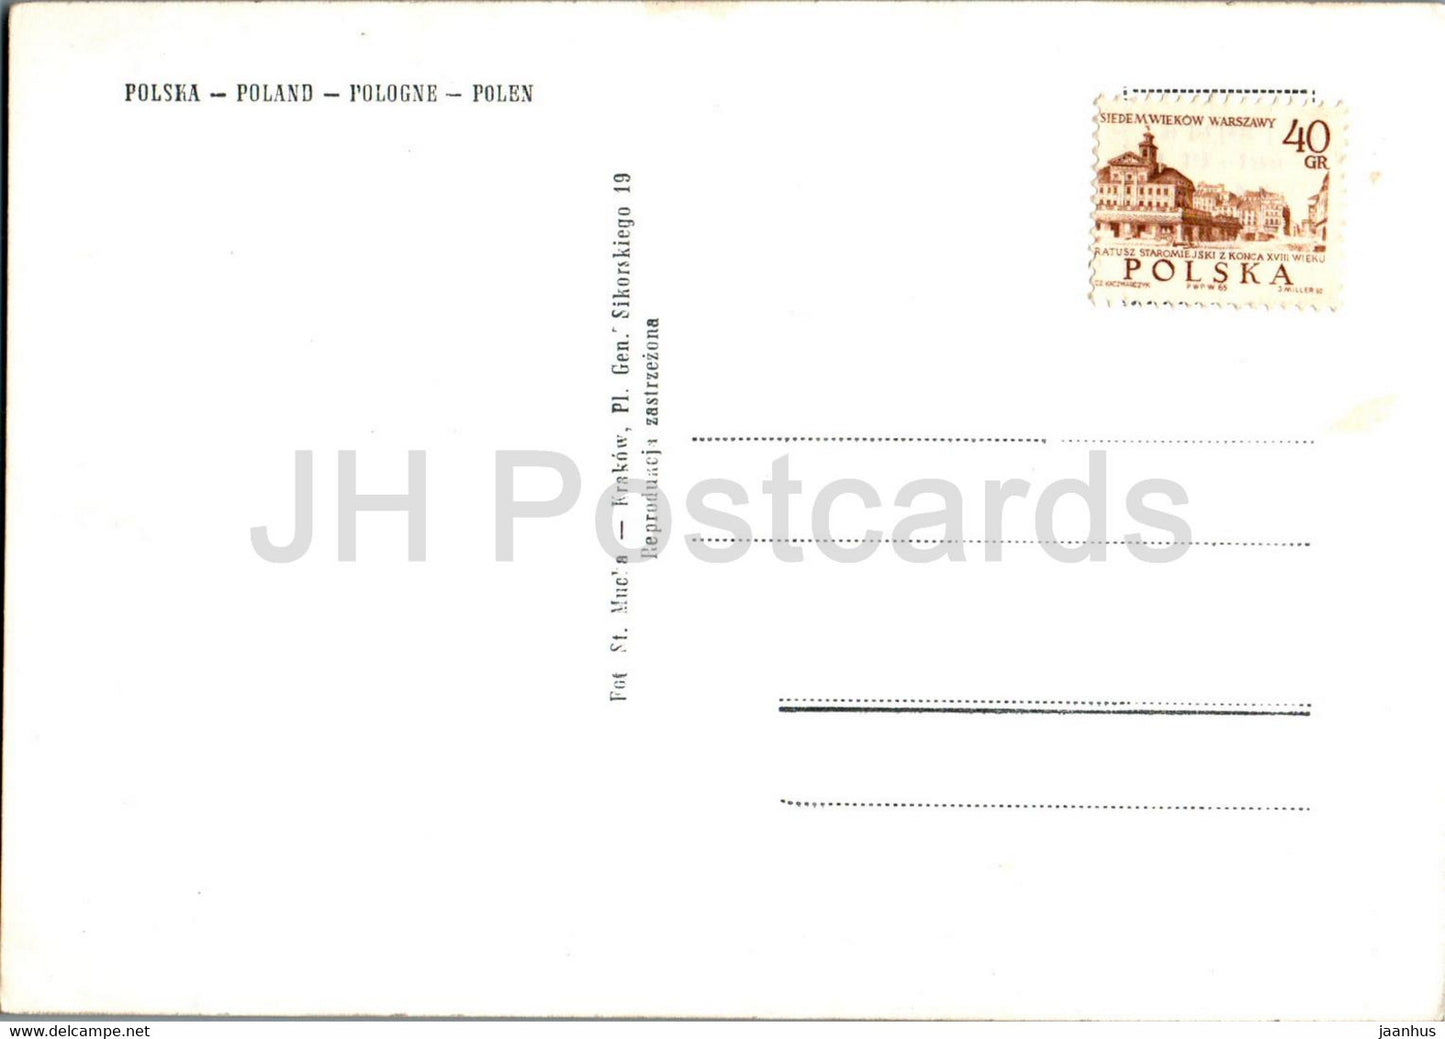 Krakow - Kosciol N D Marii w nocy spod arkad Sukiennic - Blessed Virgin Mary church - old postcard - Poland - unused